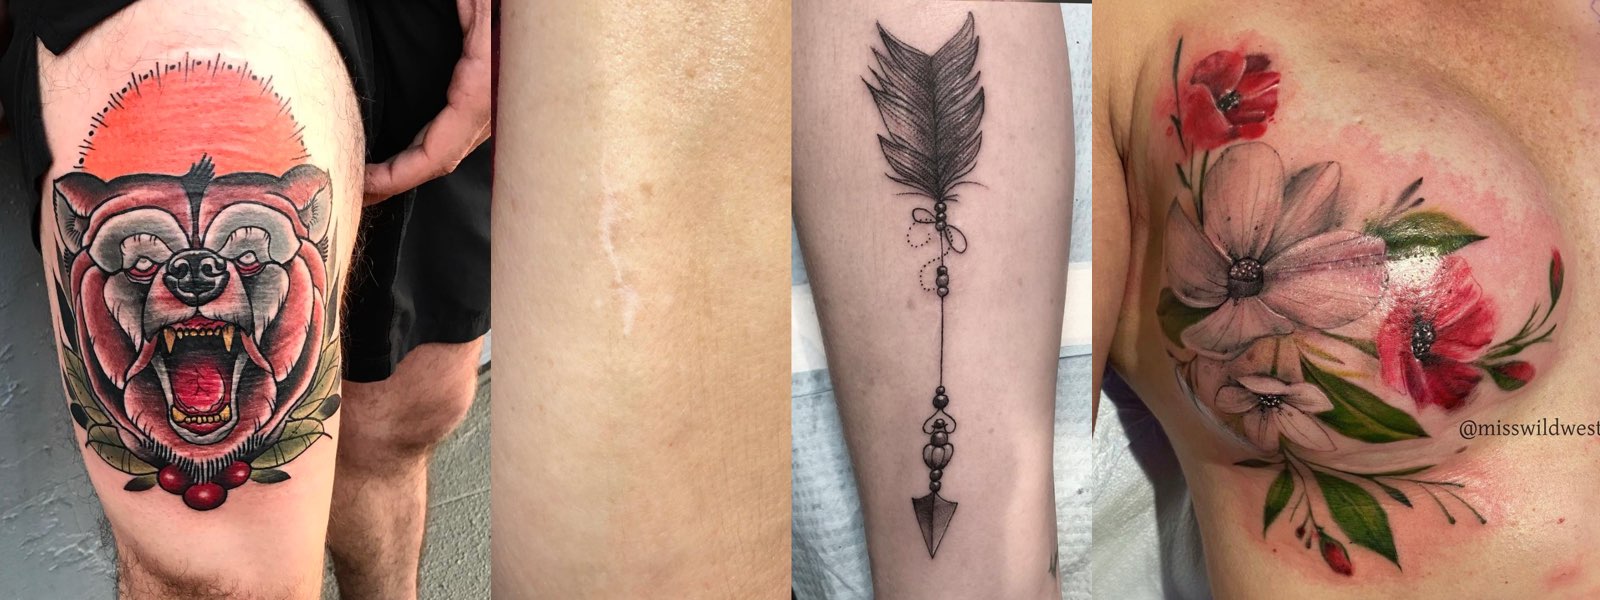 Scar CoverUp Tattoos Help Women Regain Confidence in Their Bodies